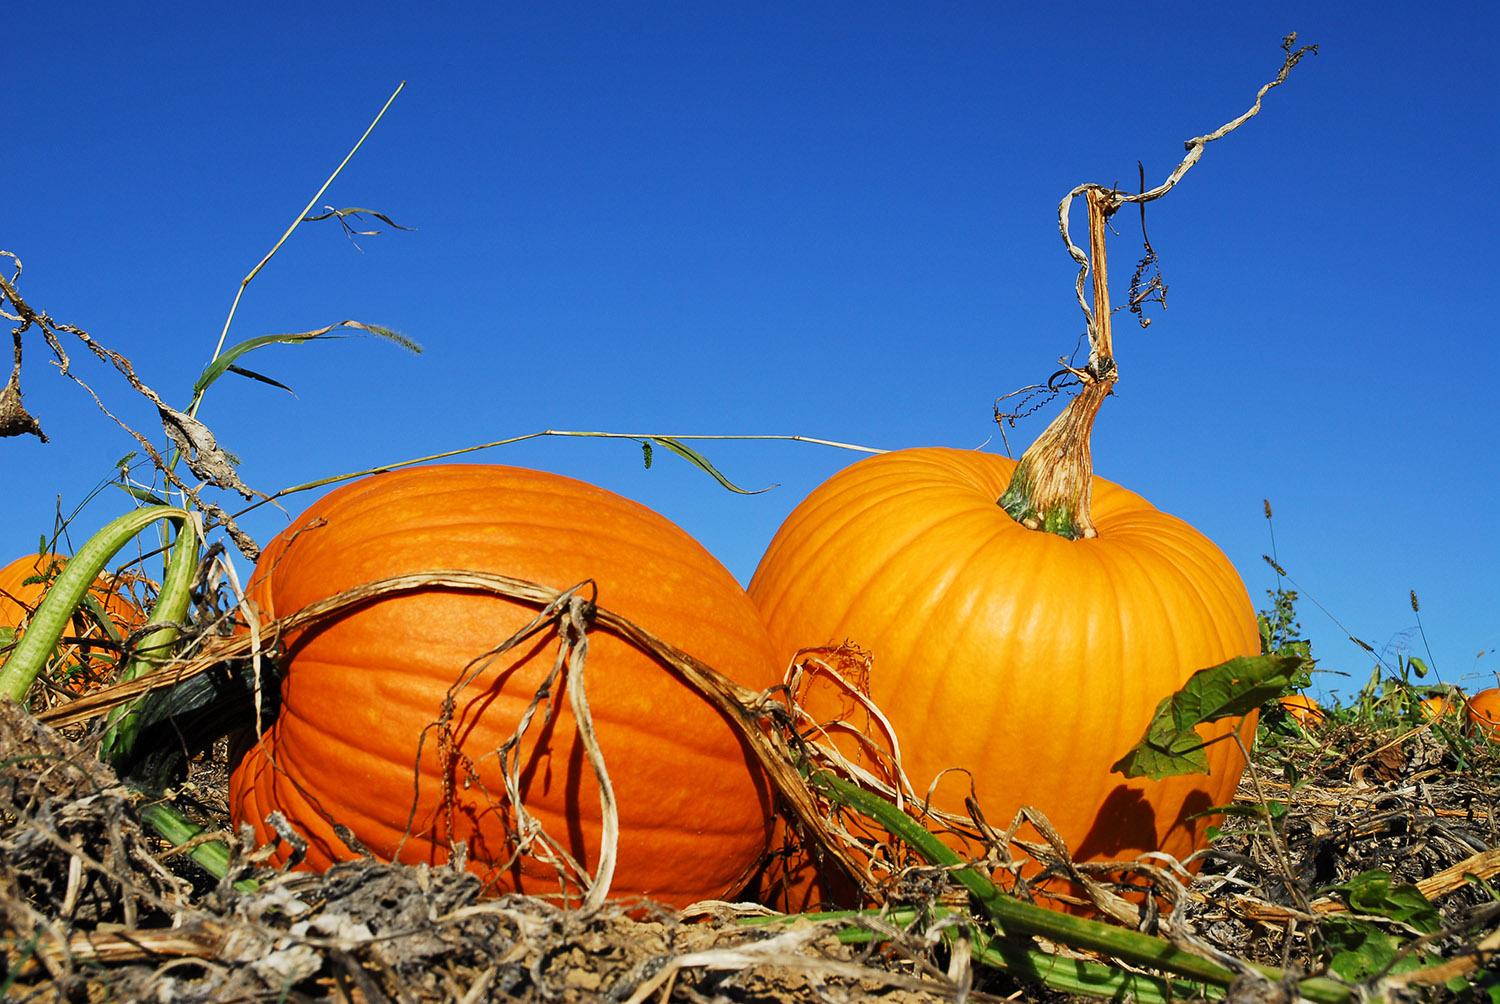 Pumpkin_Patch_Orange_Harvest_Crop_Blue_Sky_Autumn.JPG